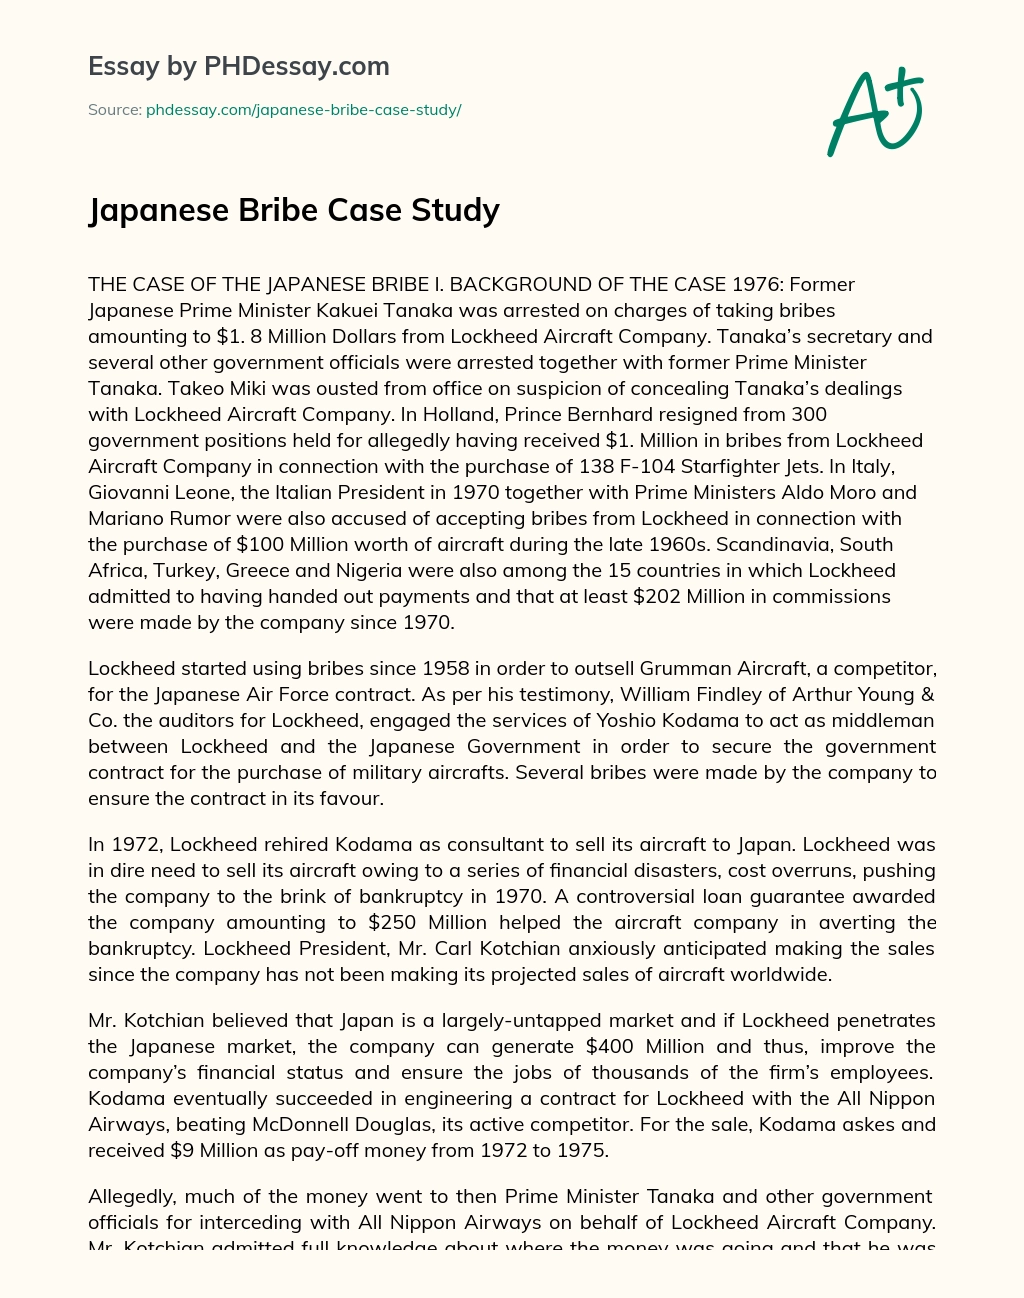 Japanese Bribe Case Study essay